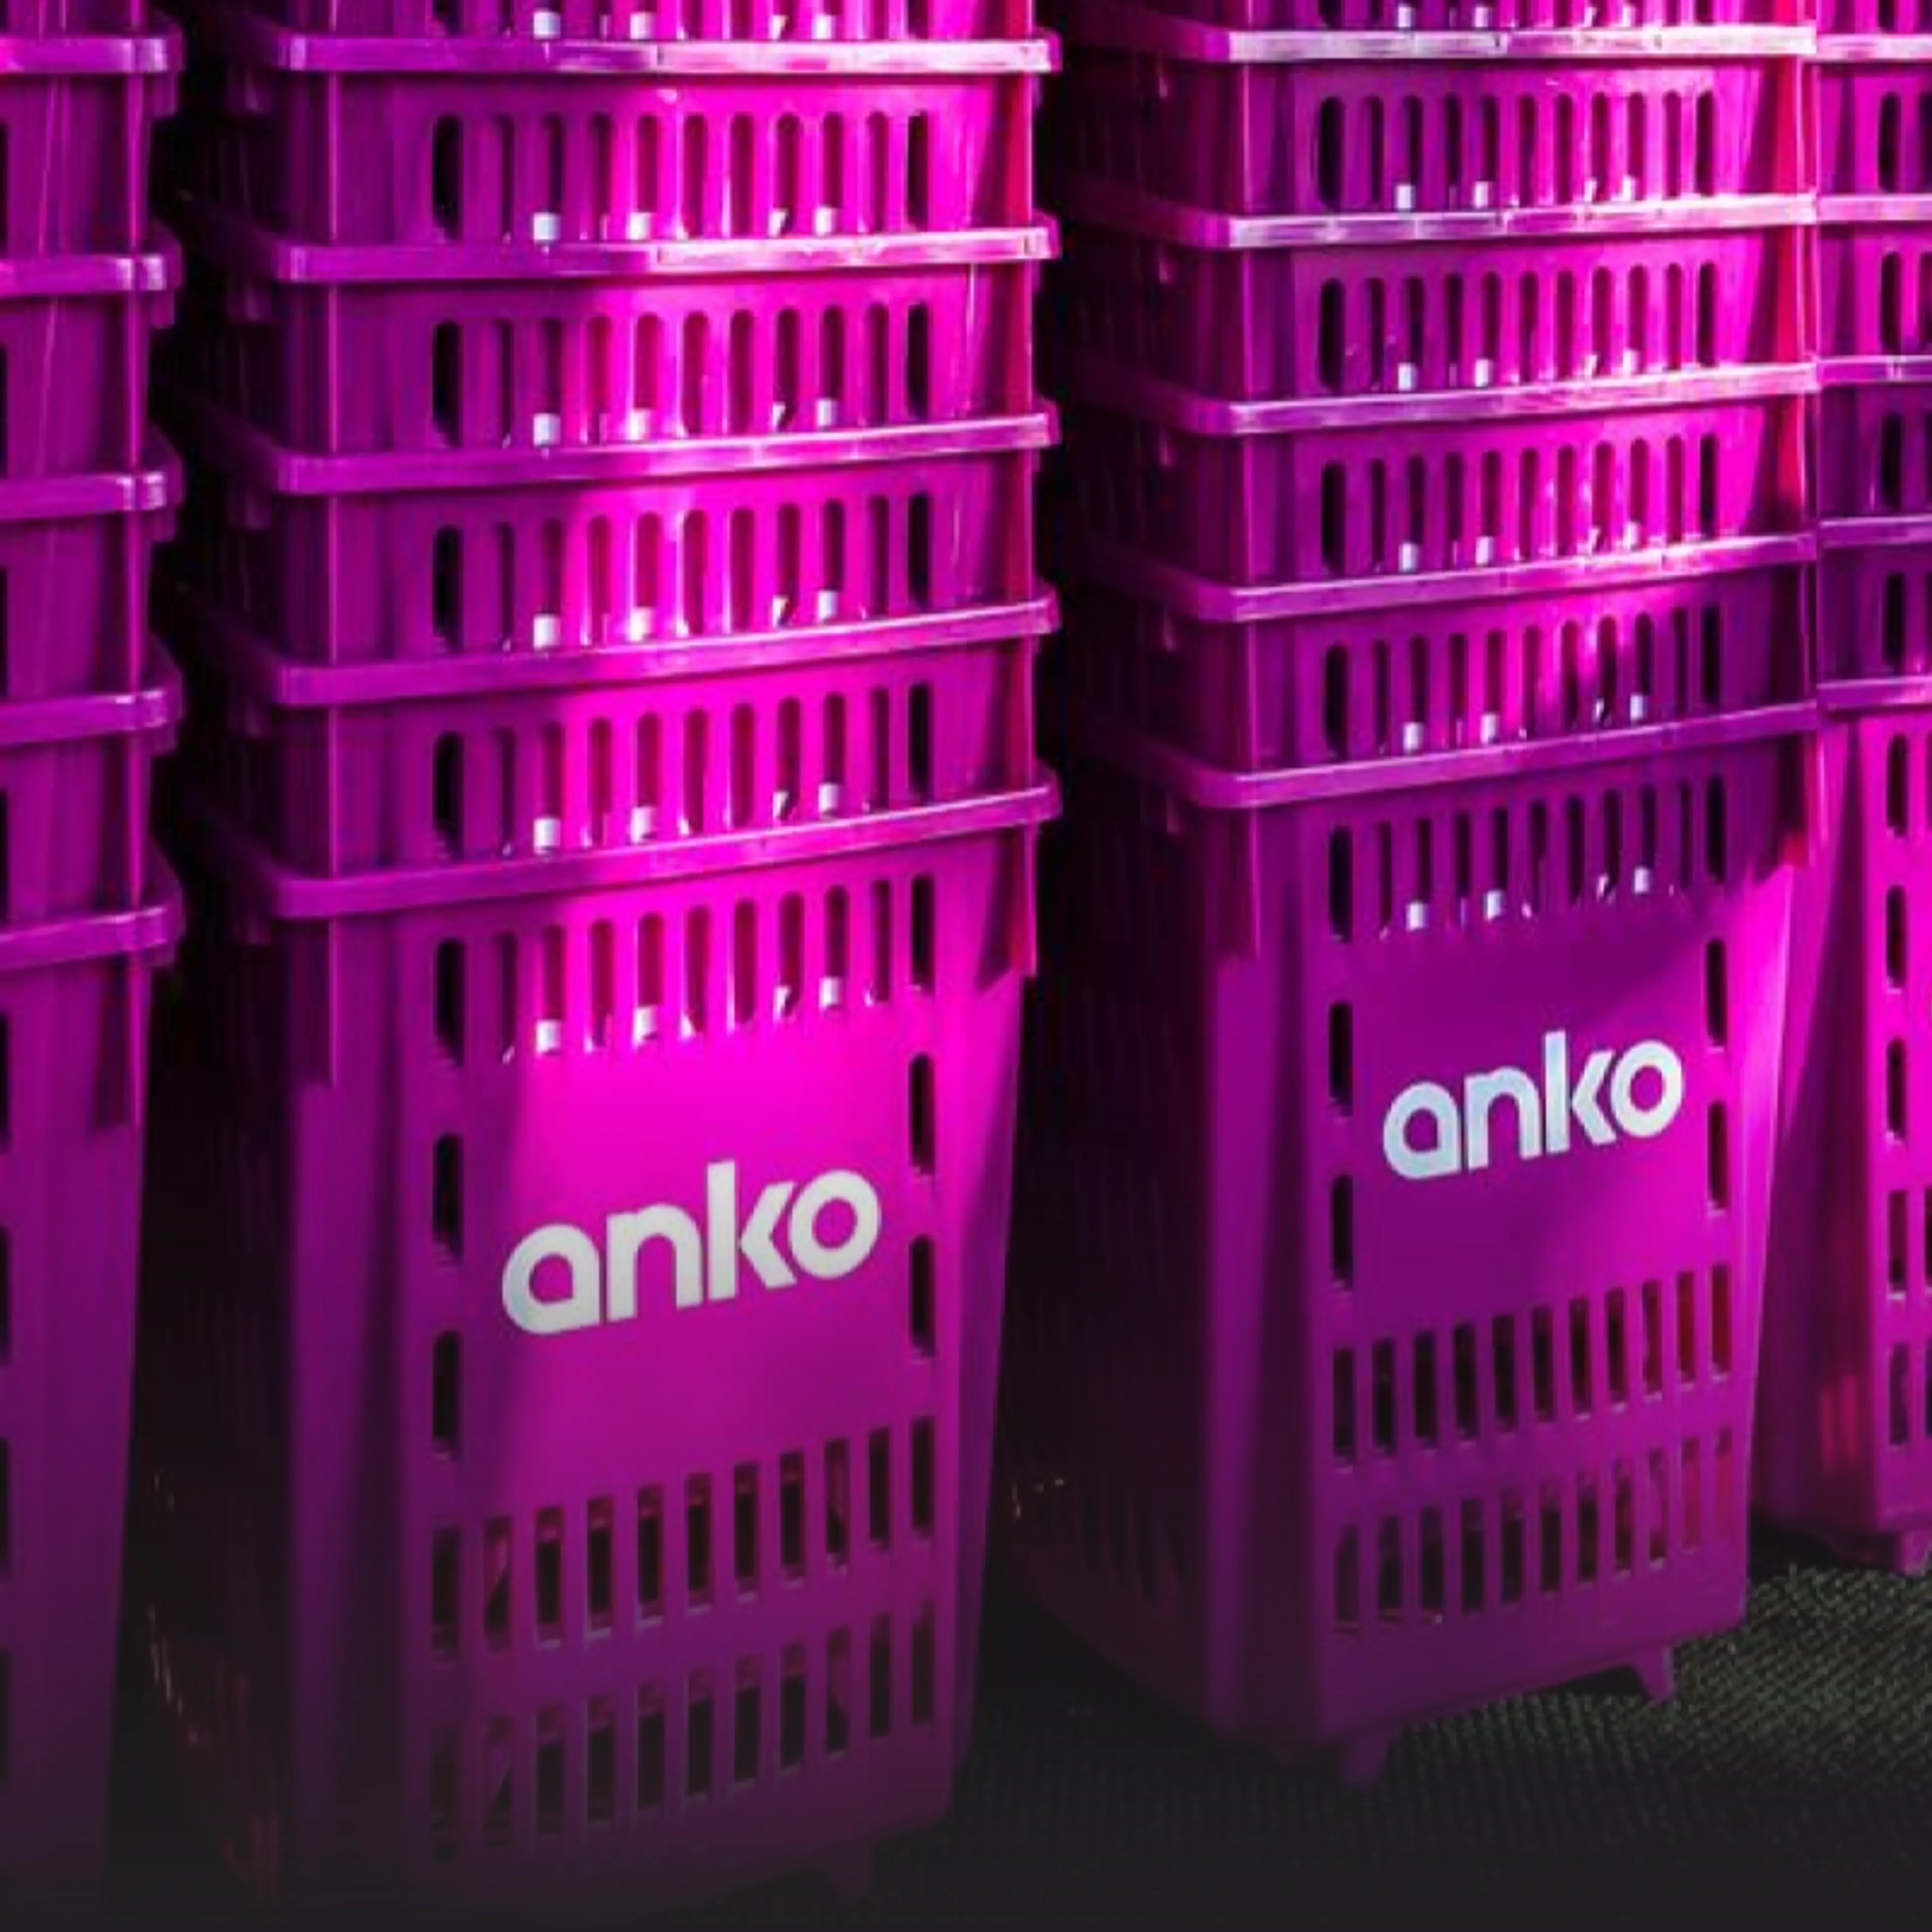 Australian brand Anko makes India foray